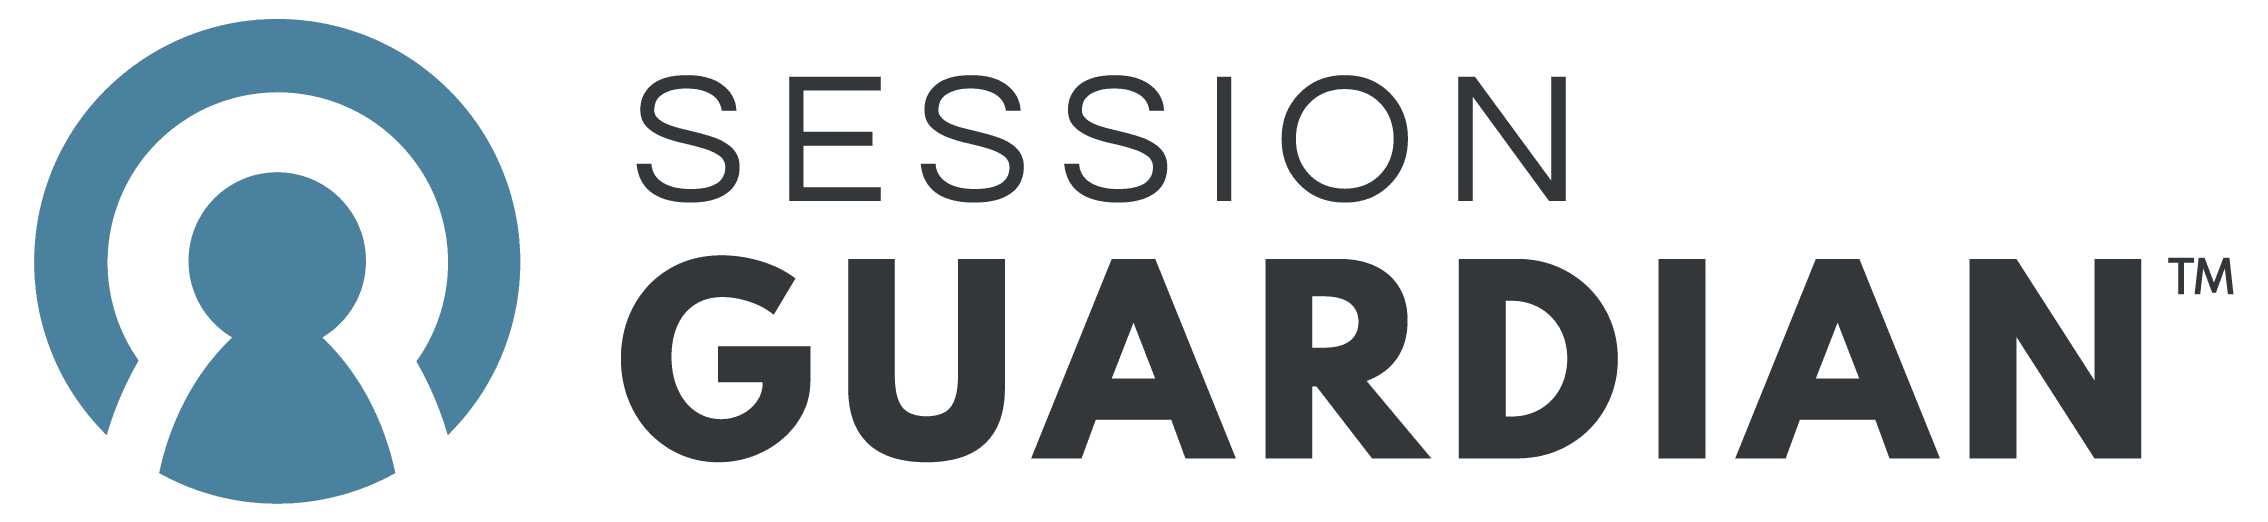 SessionGuardian-logo